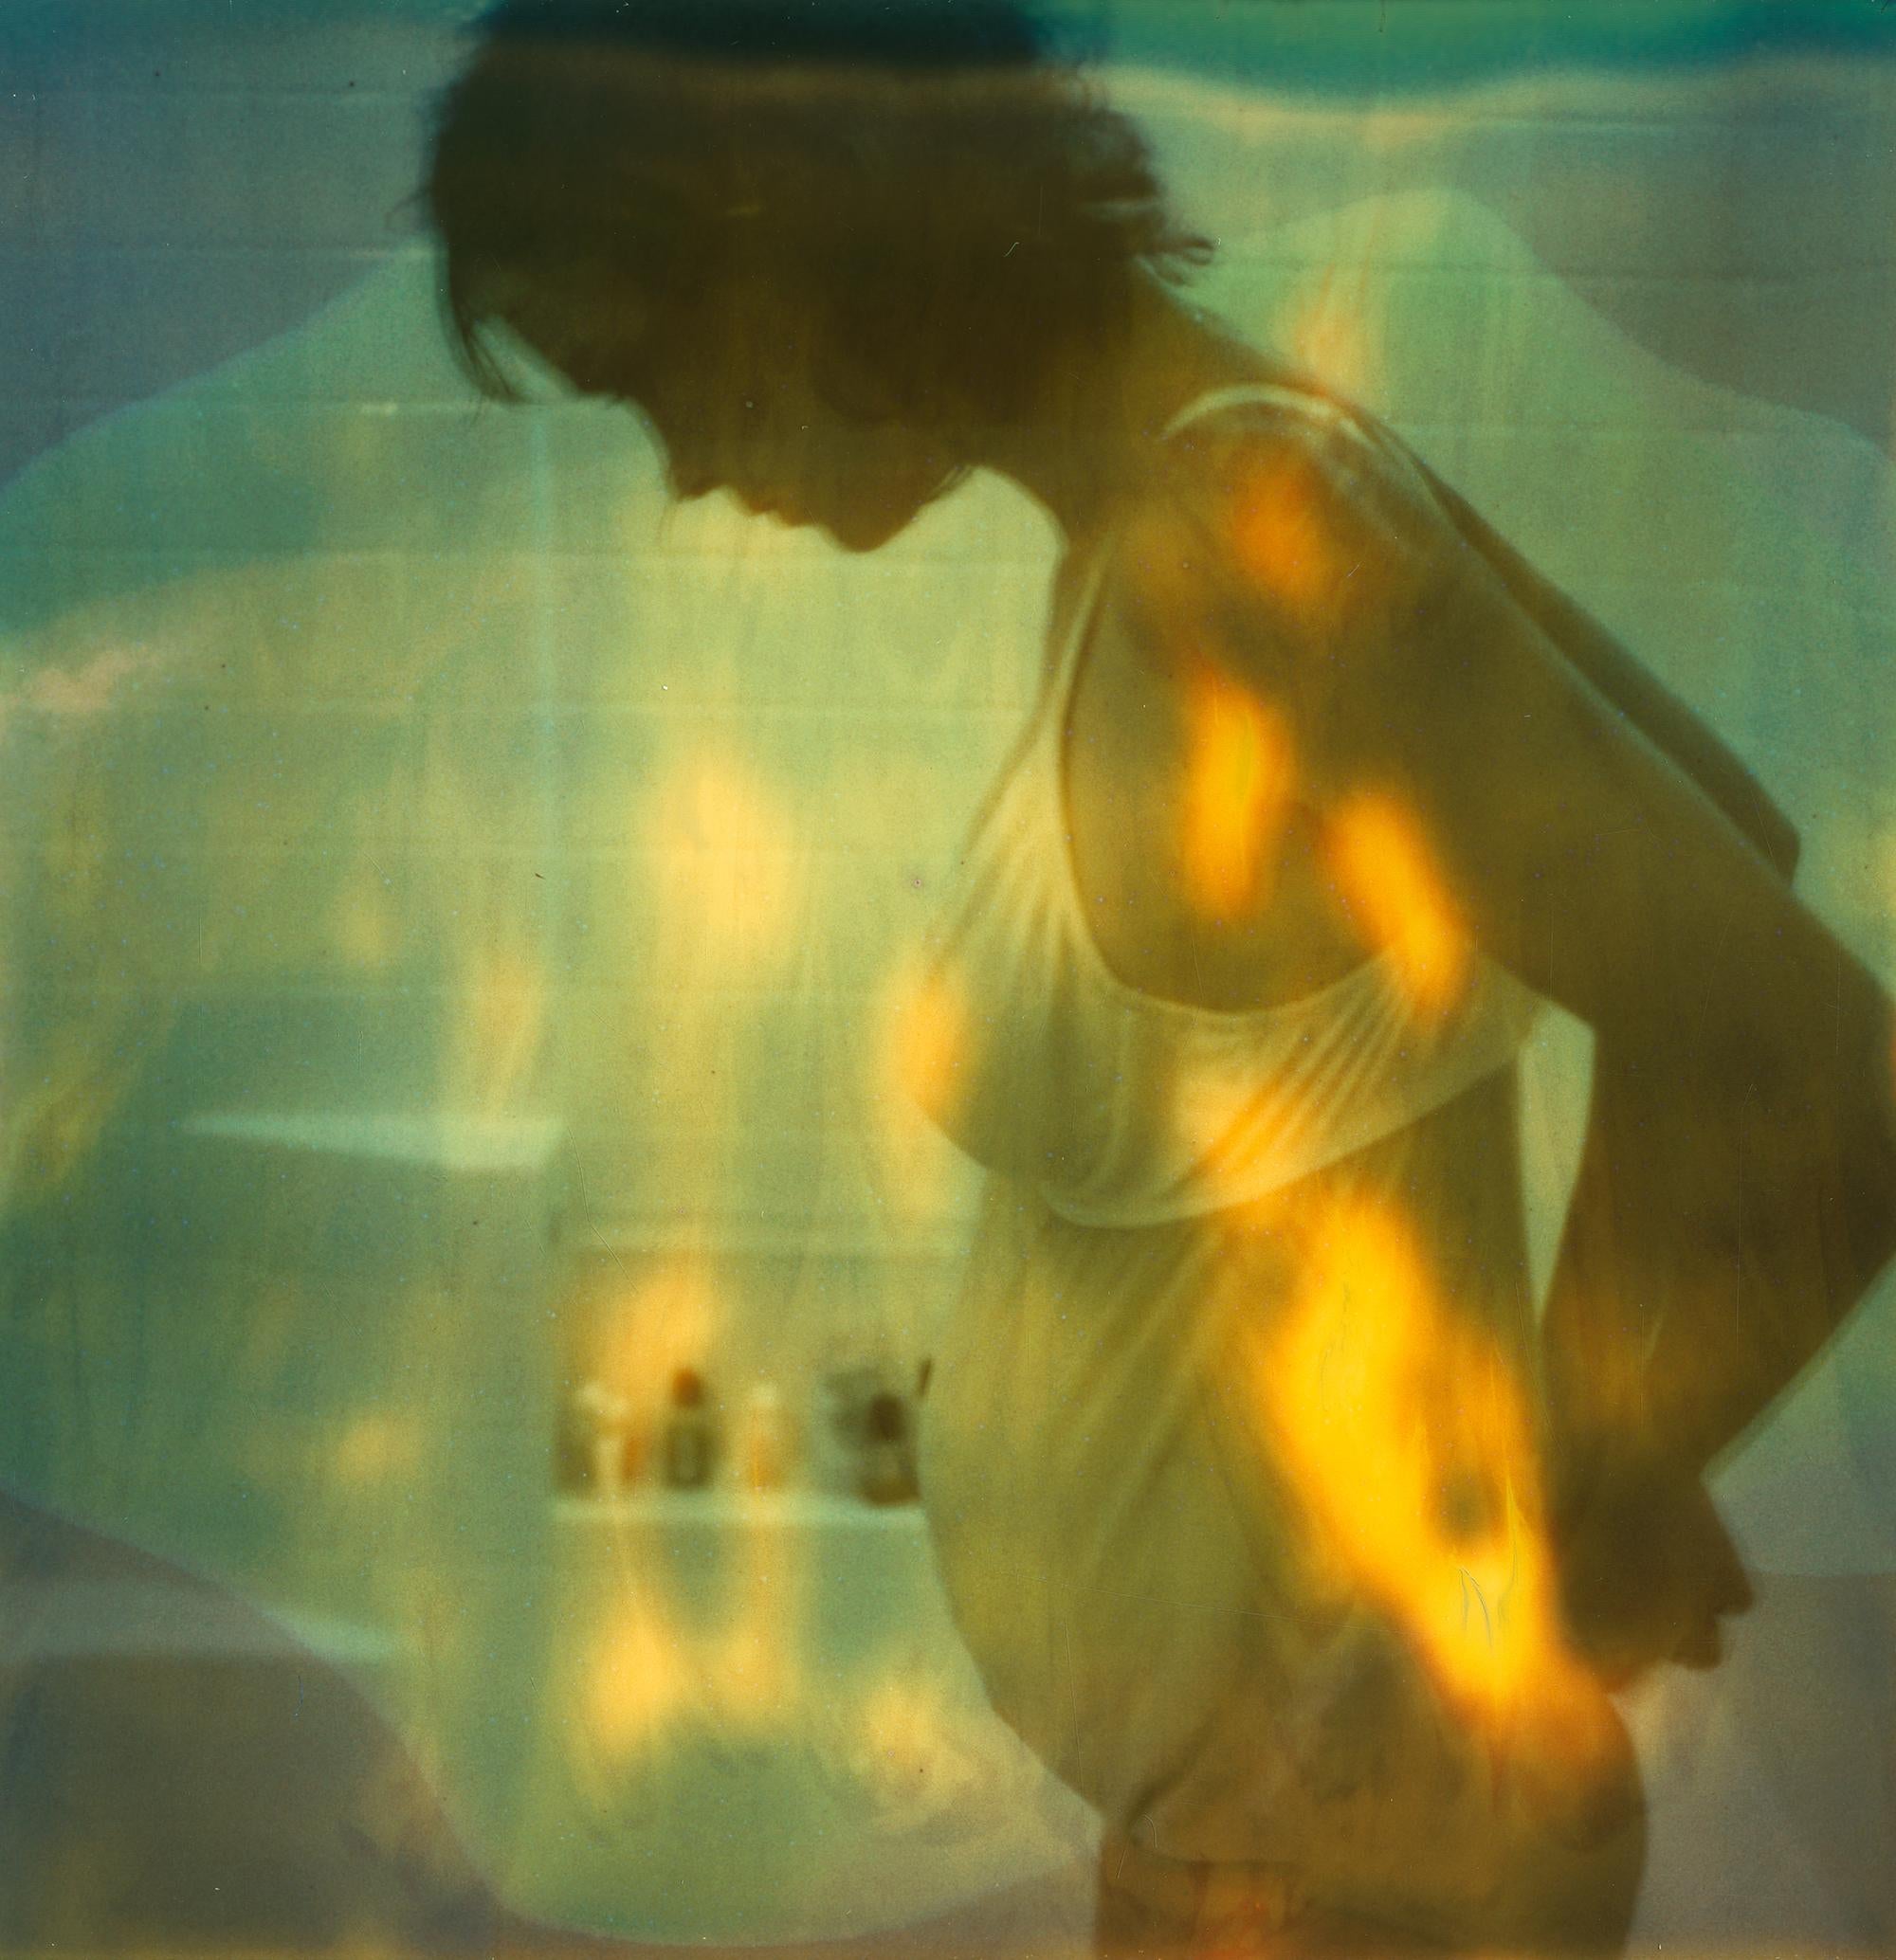 Stefanie Schneider Figurative Photograph - Everything put Together (Suburbia) - Contemporary, Polaroid, Analog, Portrait